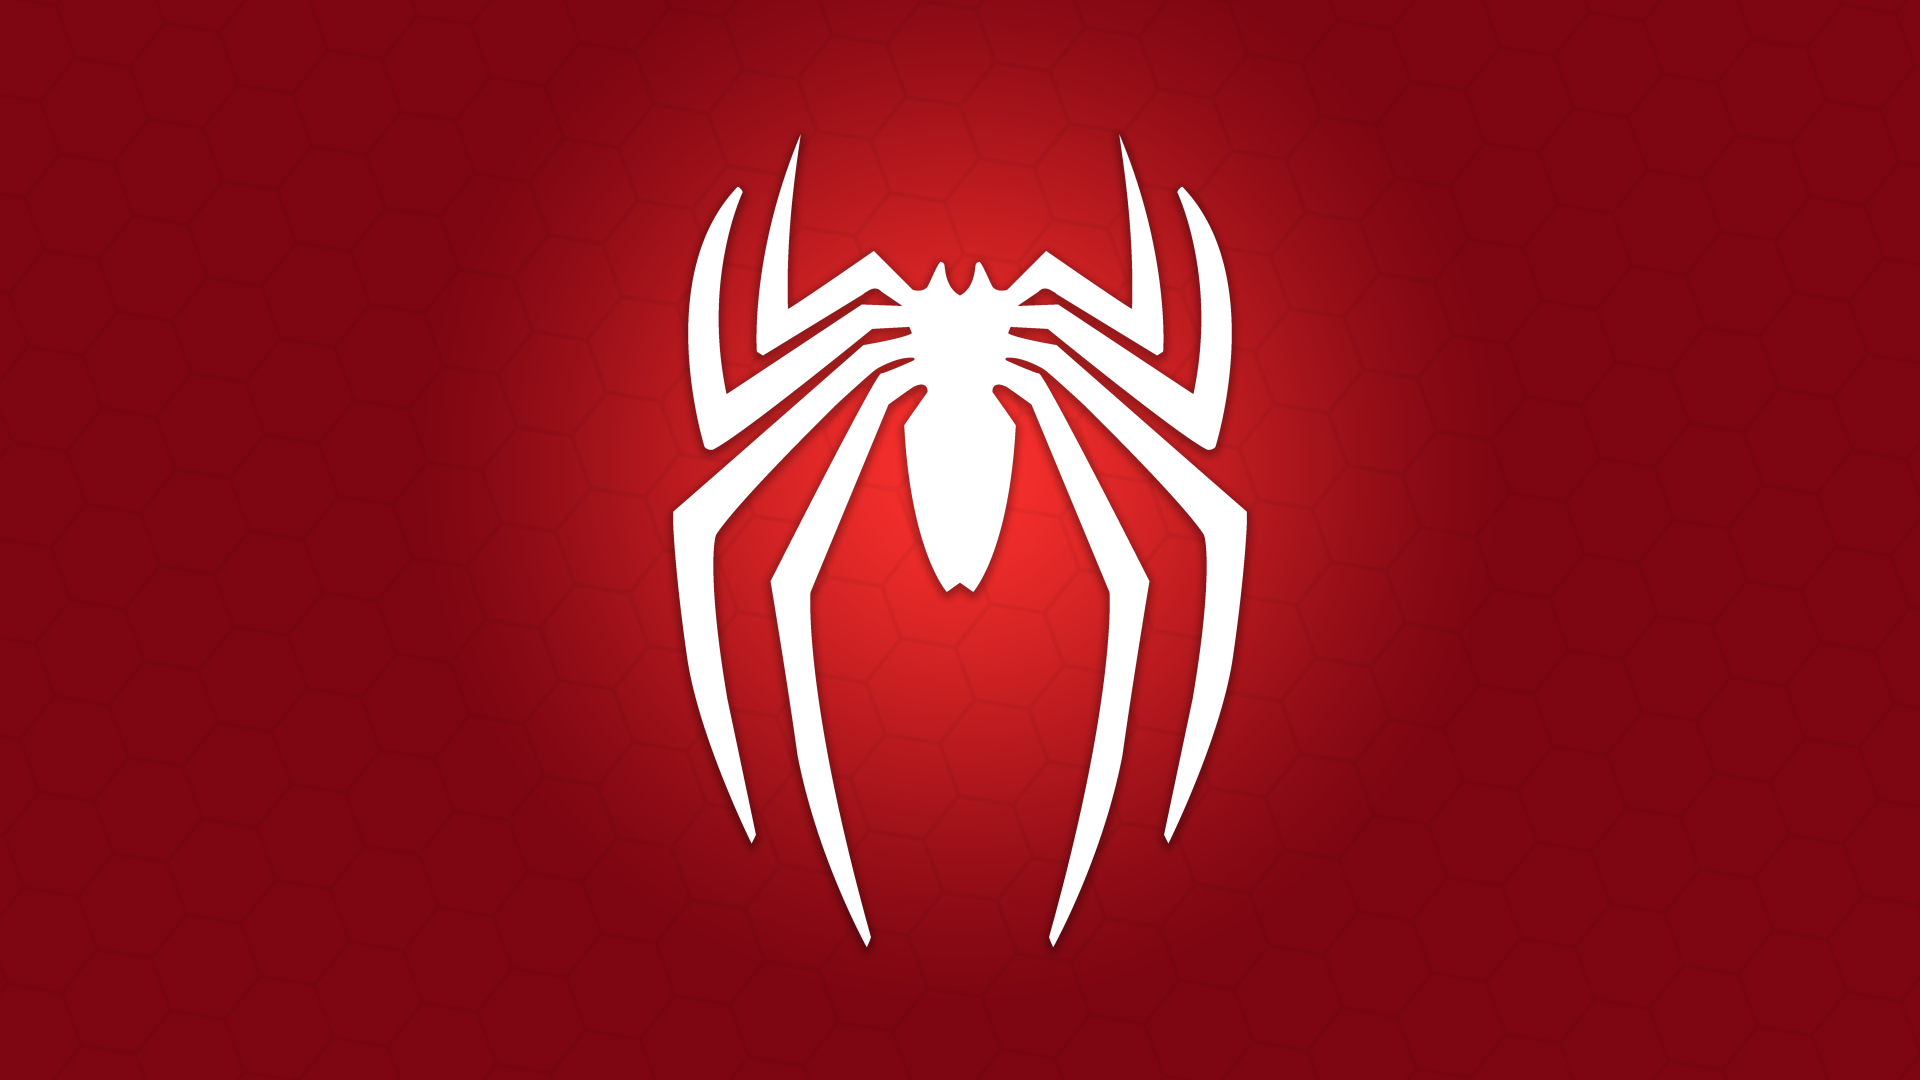 Spider Man 8k Ultra HD Wallpaper. Background Imagex4500